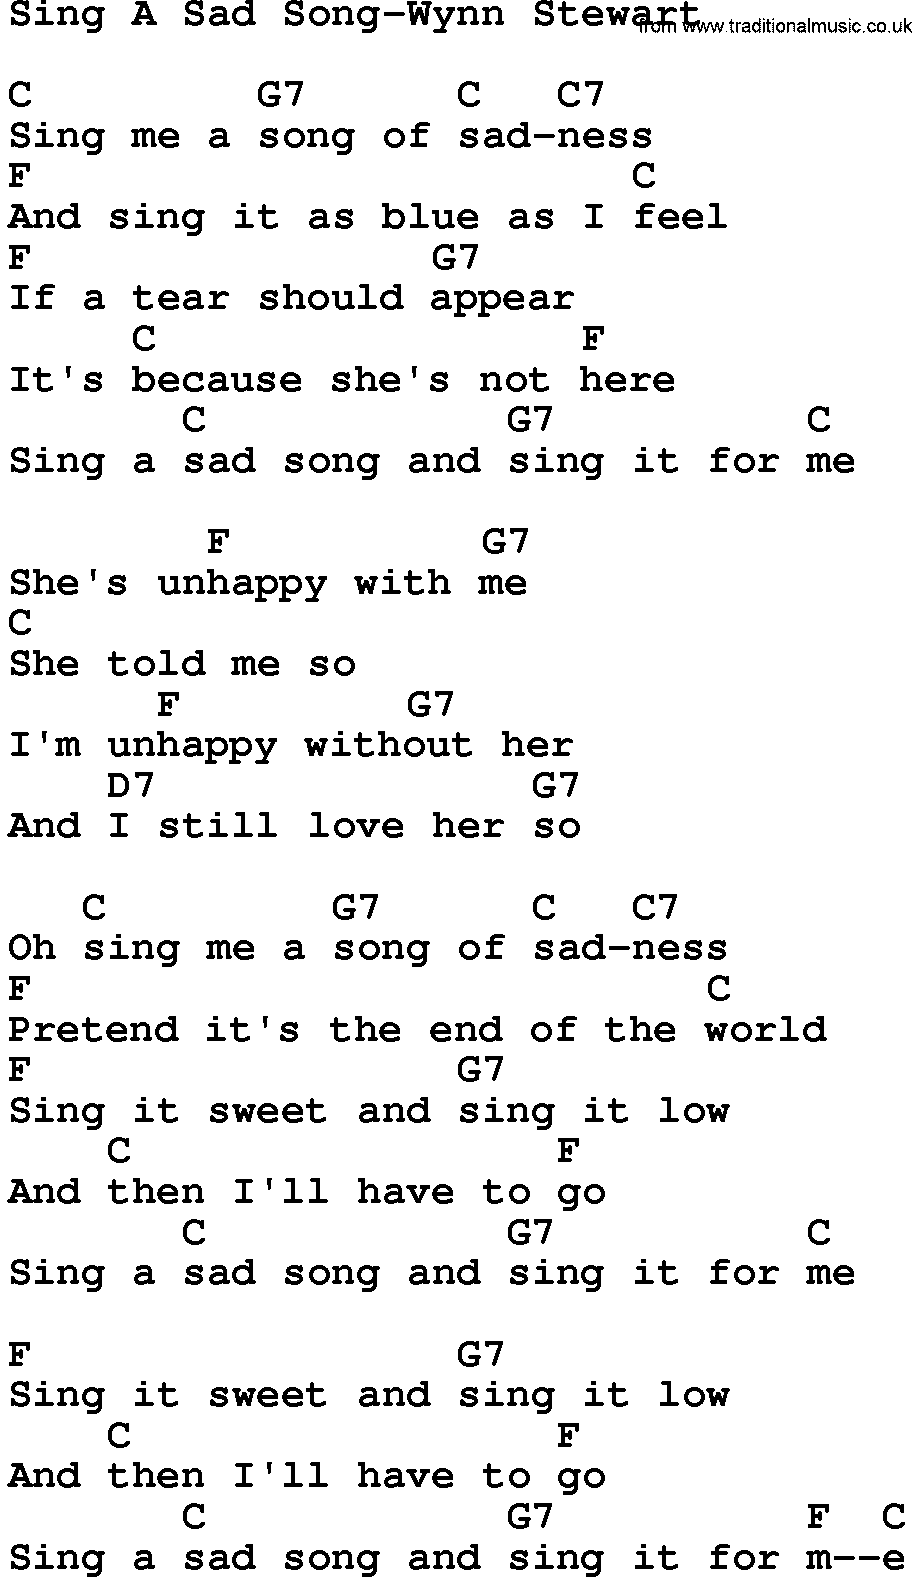 Country music song: Sing A Sad Song-Wynn Stewart lyrics and chords